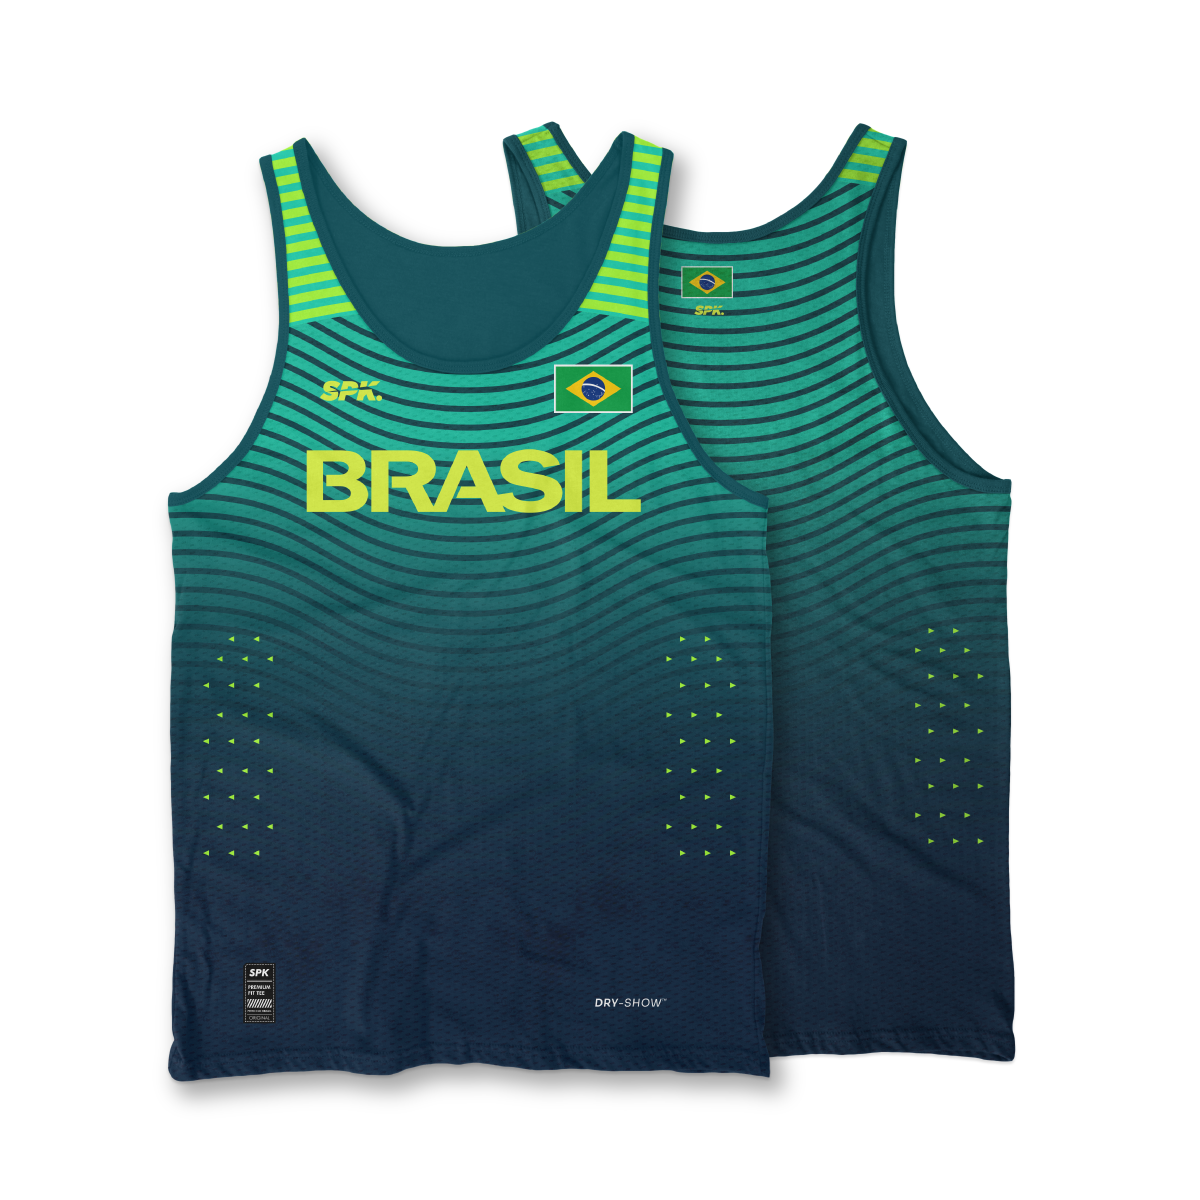 Camiseta Regata Corrida Maratona Running Brasil Proteção Uv - Azul/Verde  Florescente